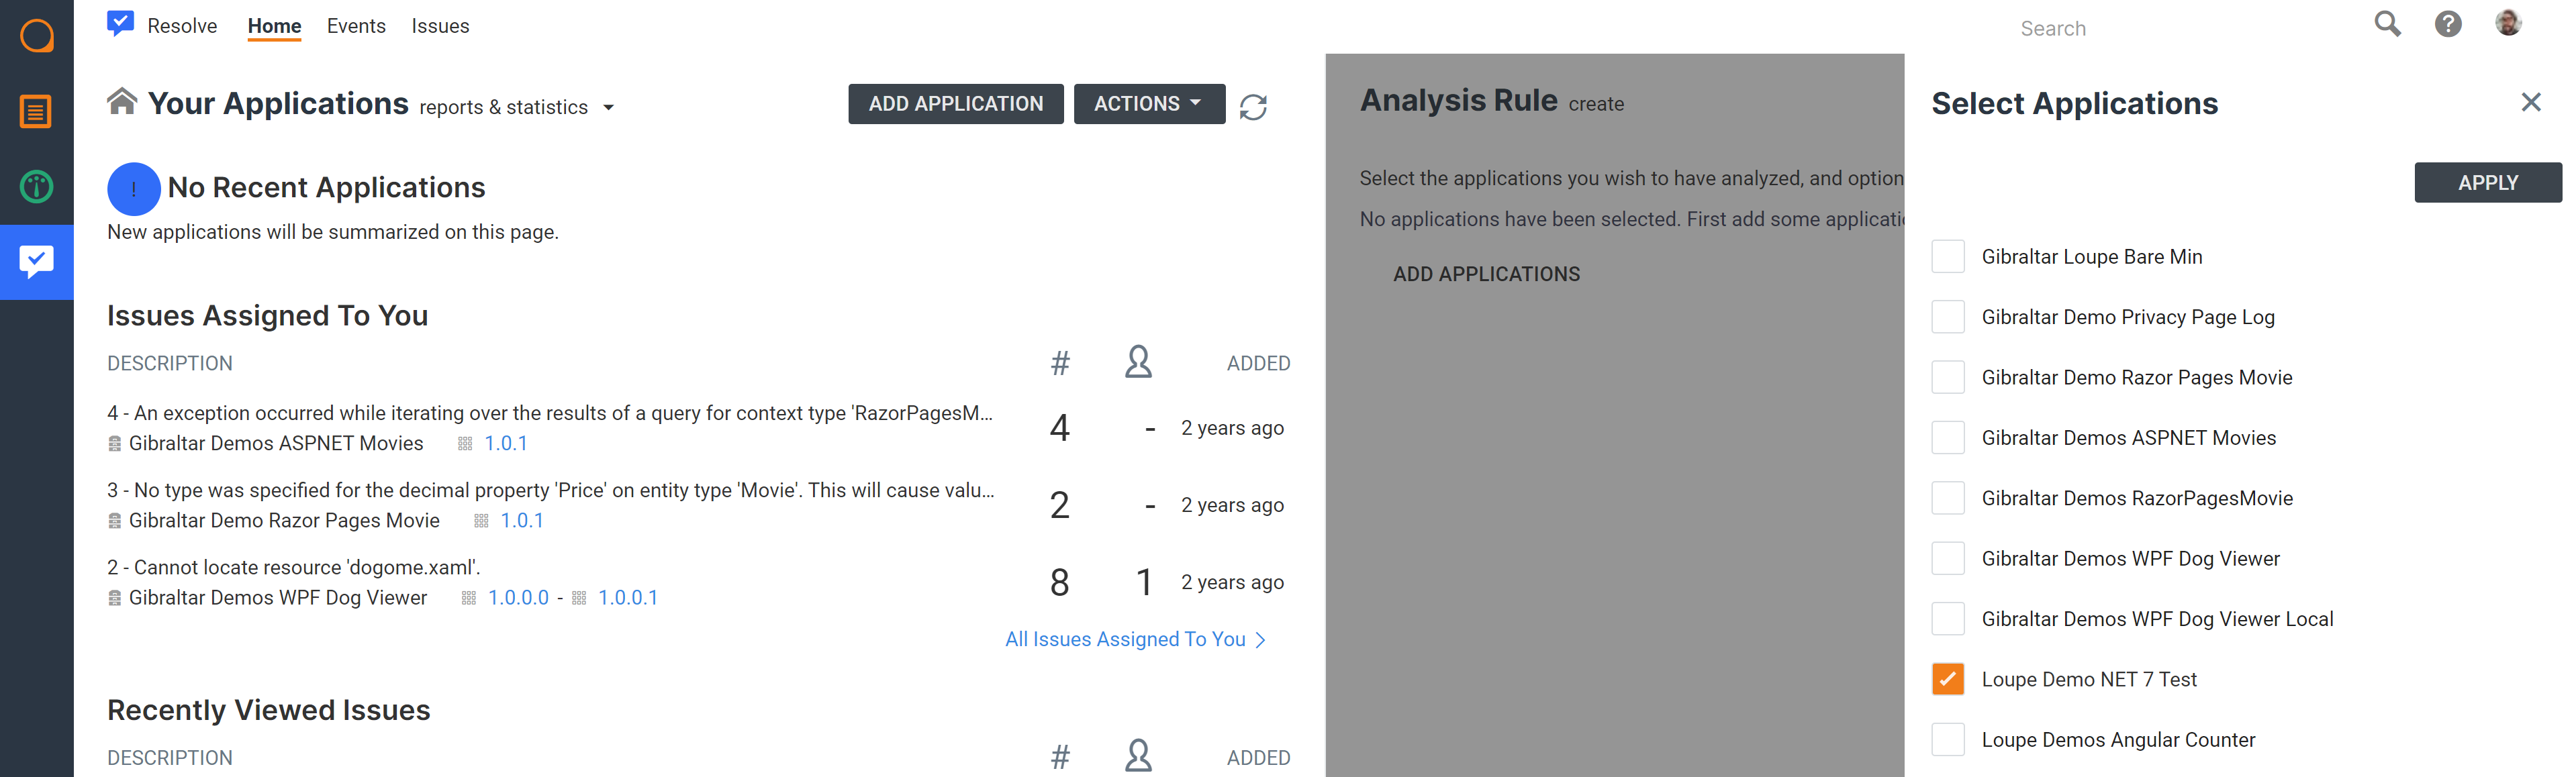 Screenshot of the add applications menu